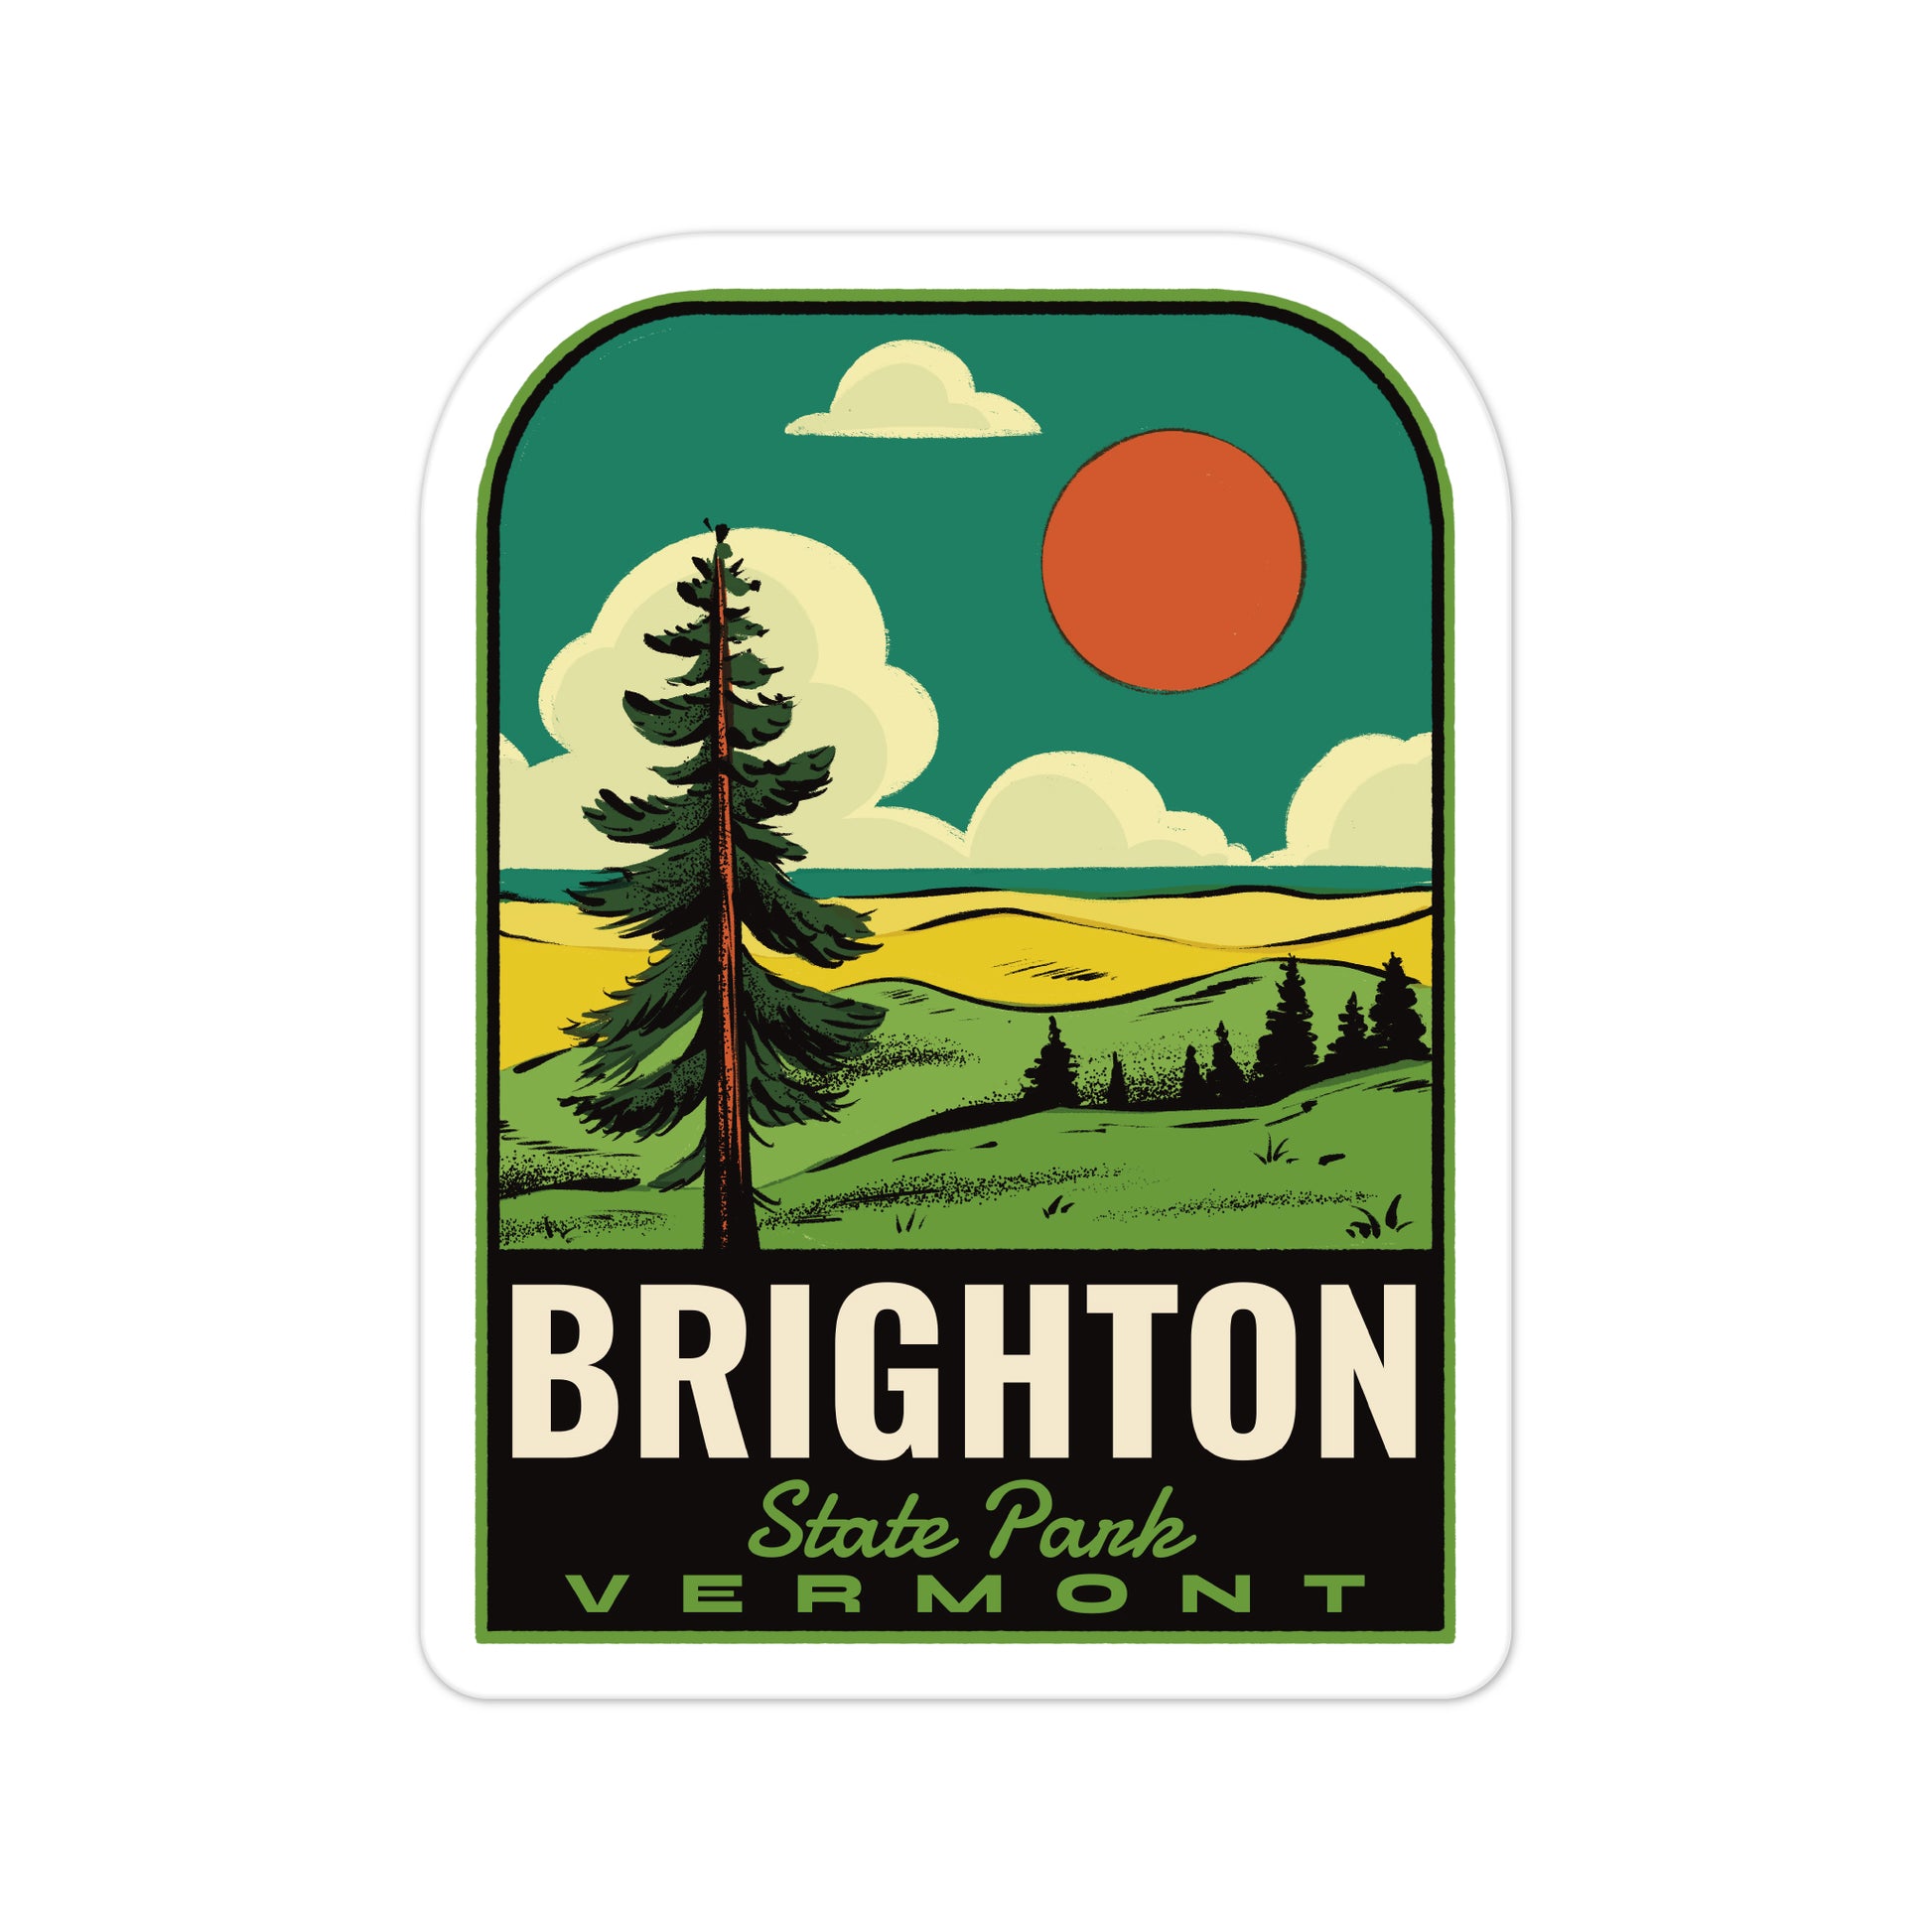 A sticker of Brighton State Park